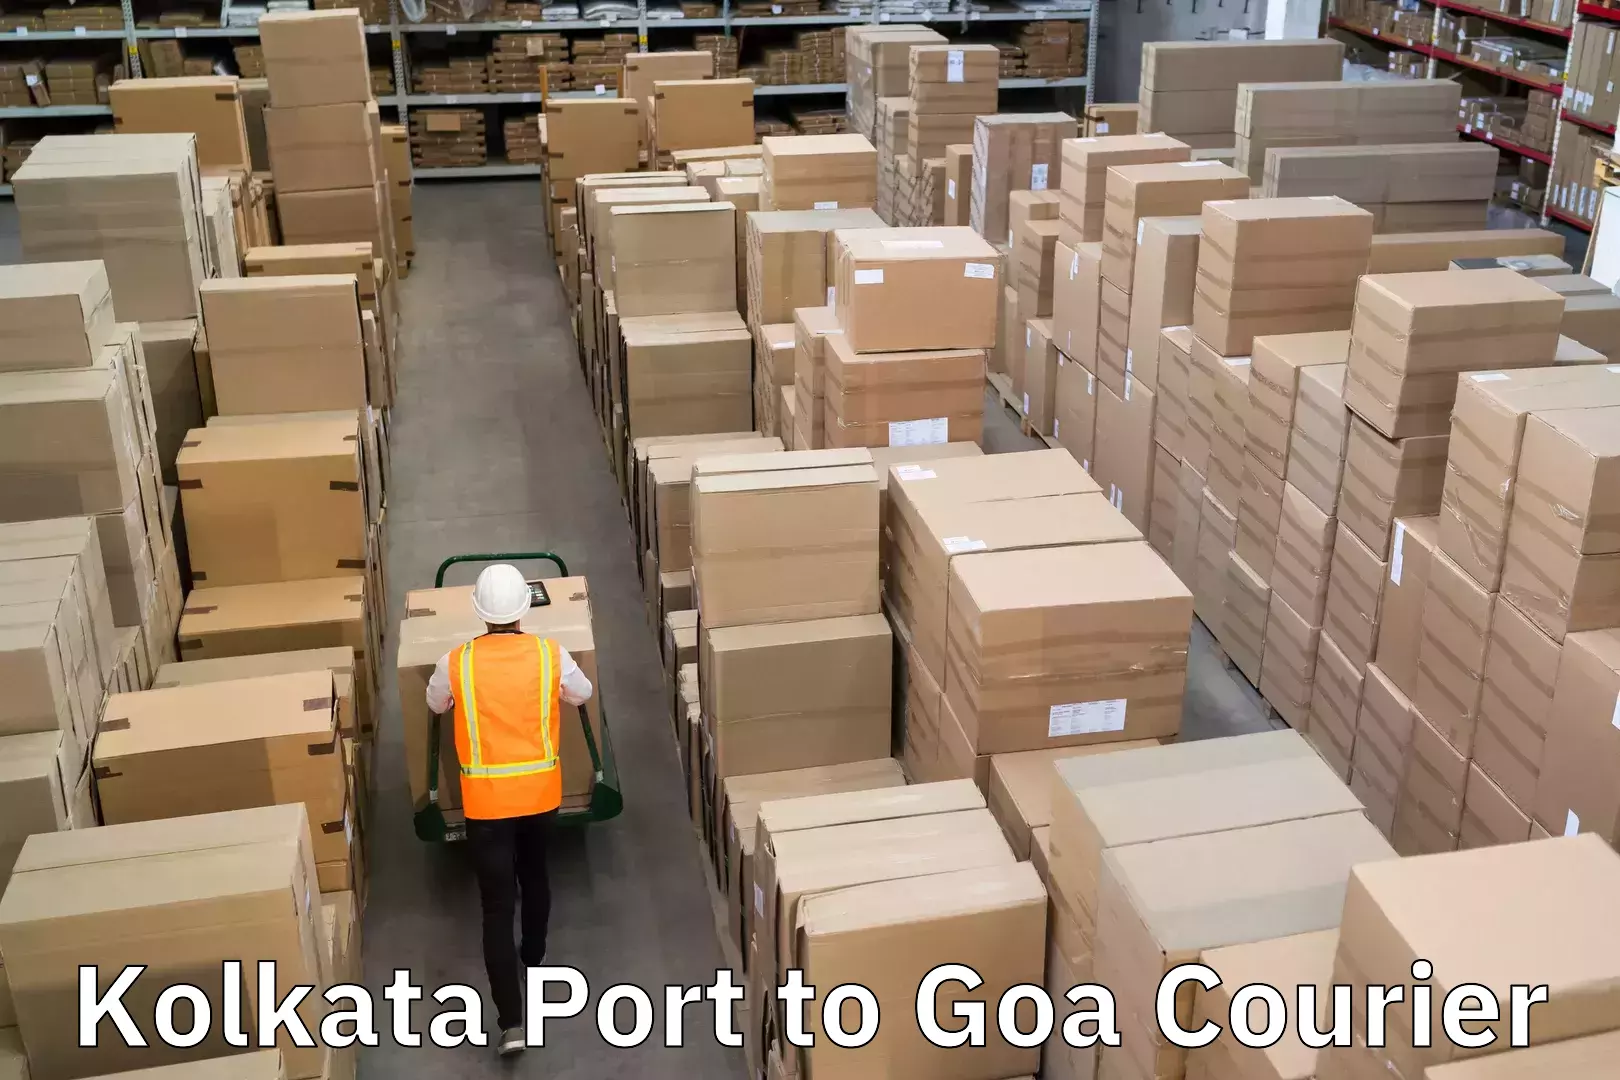 Cargo delivery service Kolkata Port to Goa